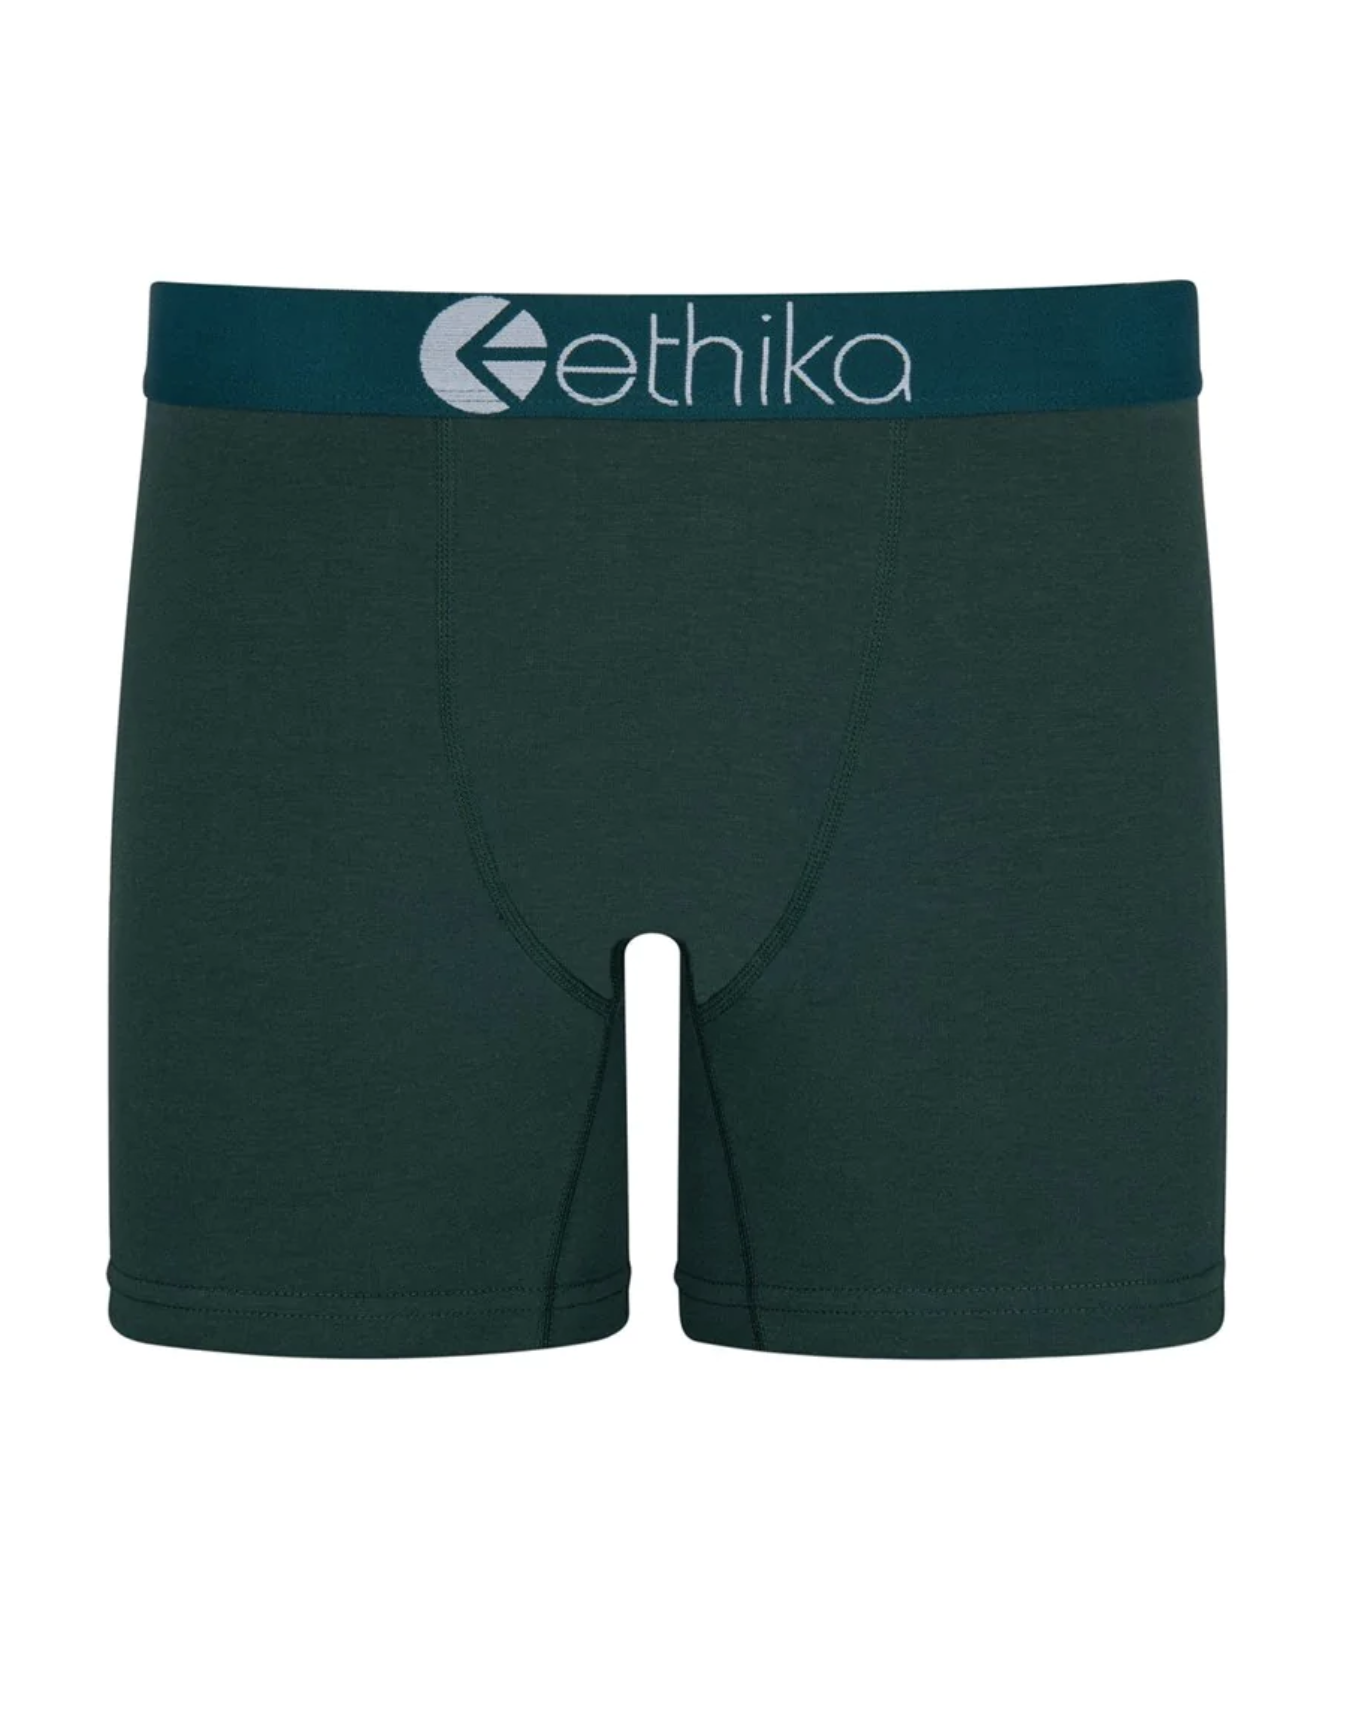 Ethika Mens Victory Green Mid Staple Underwear